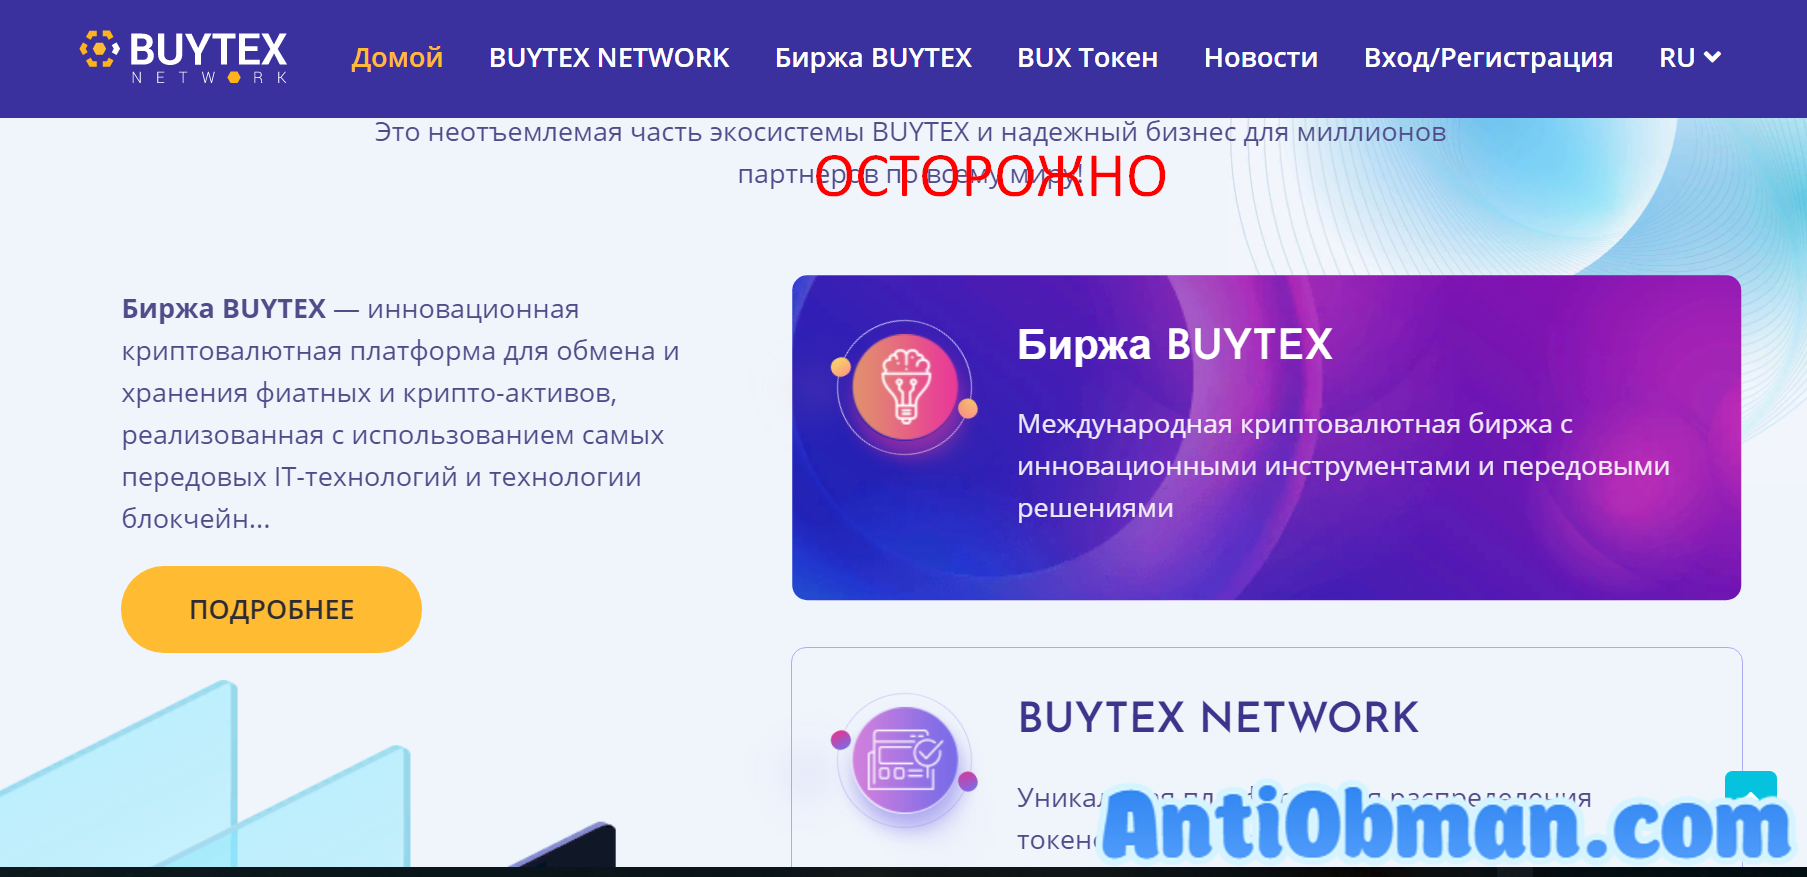 Buytex Network - отзывы и обзор buytex.net. Биржа, развод лохотрон?